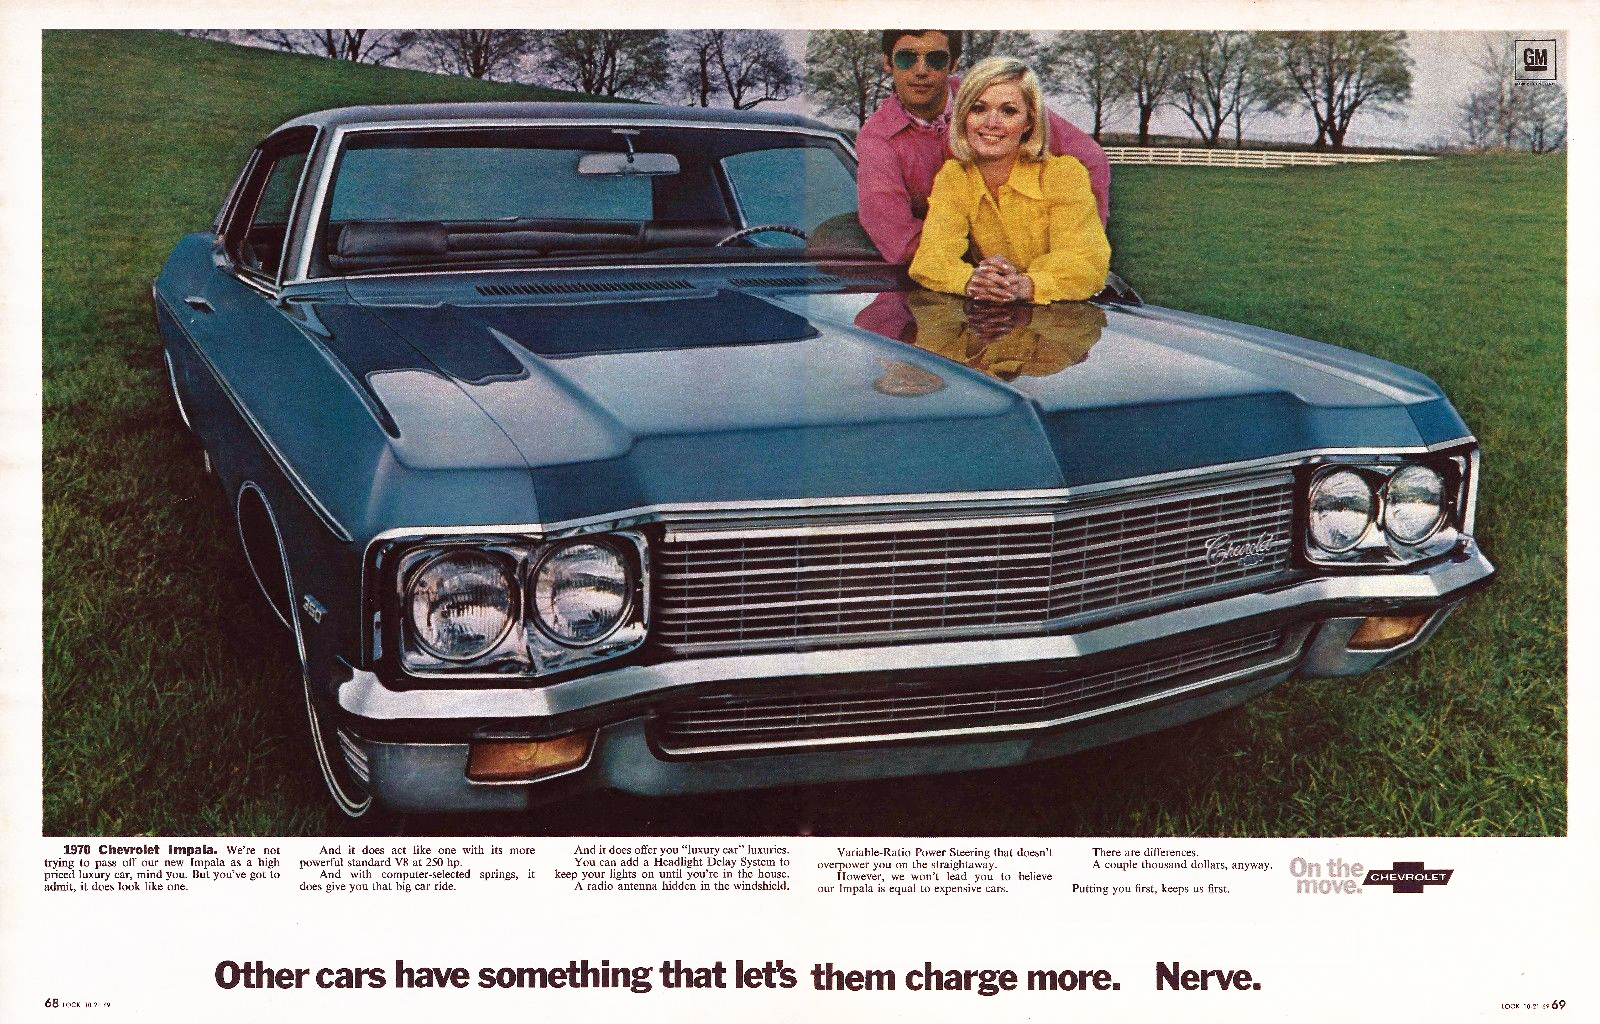 1970's Chevy Impala advertisement